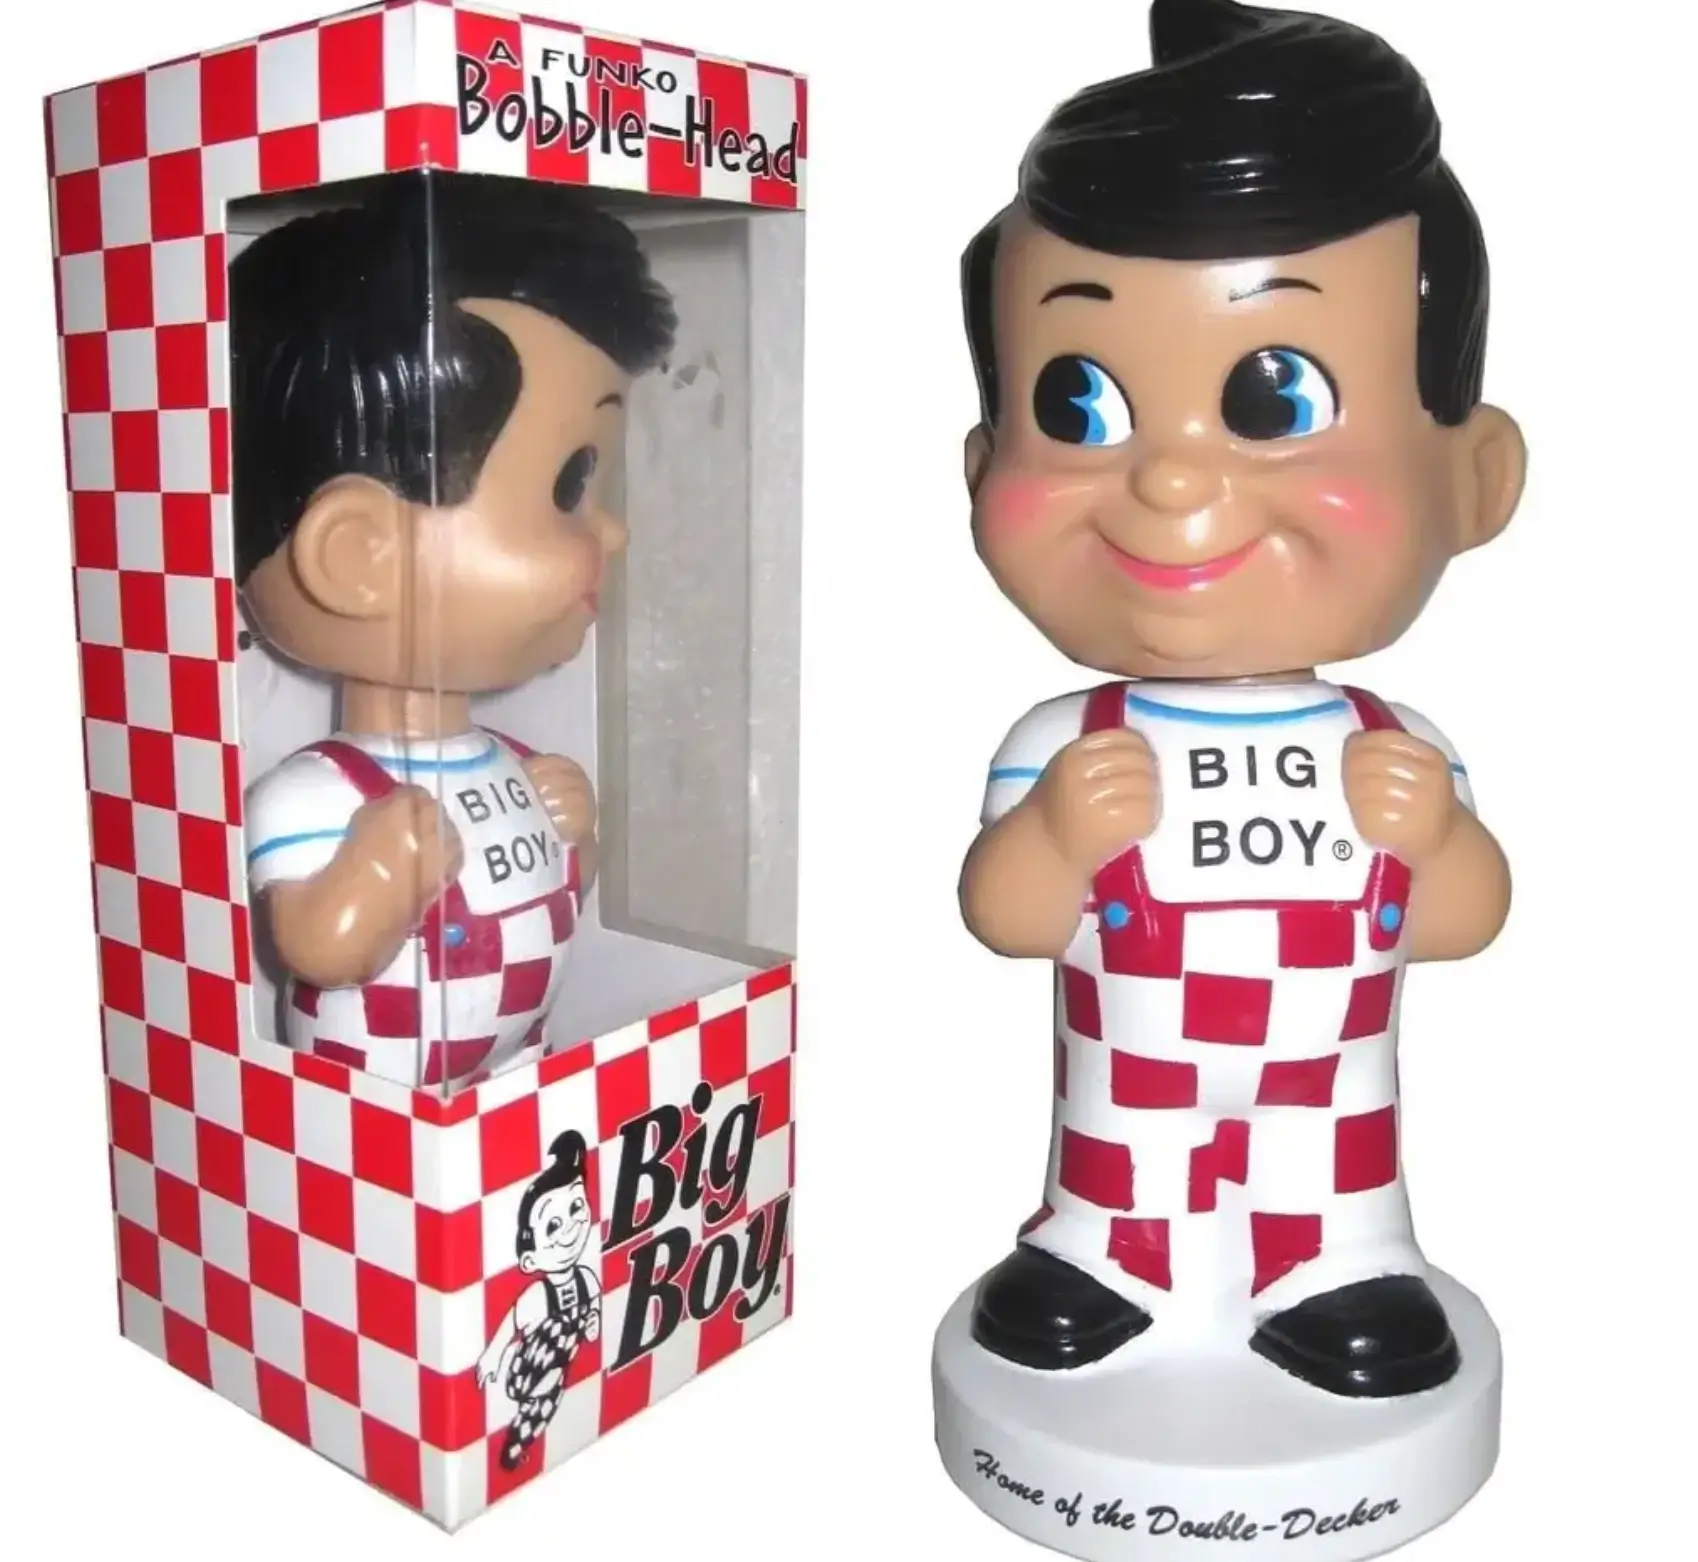 Primeiro boneco da Funko: Big Boy (1998)